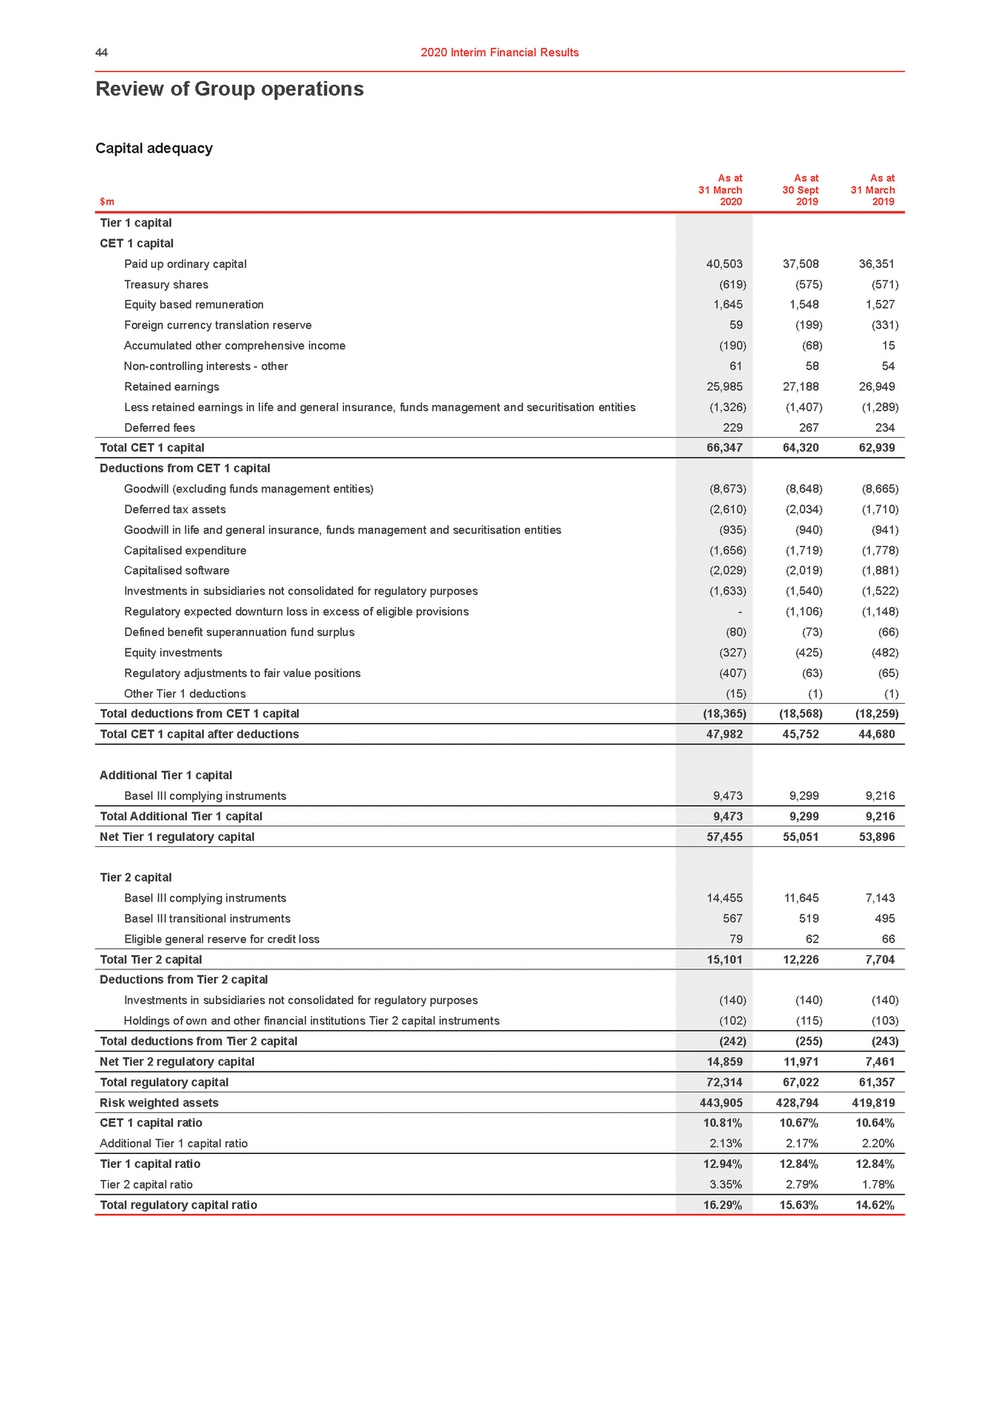 11676-3-ex1_westpac 2020 interim financial results announcement_page_049.jpg